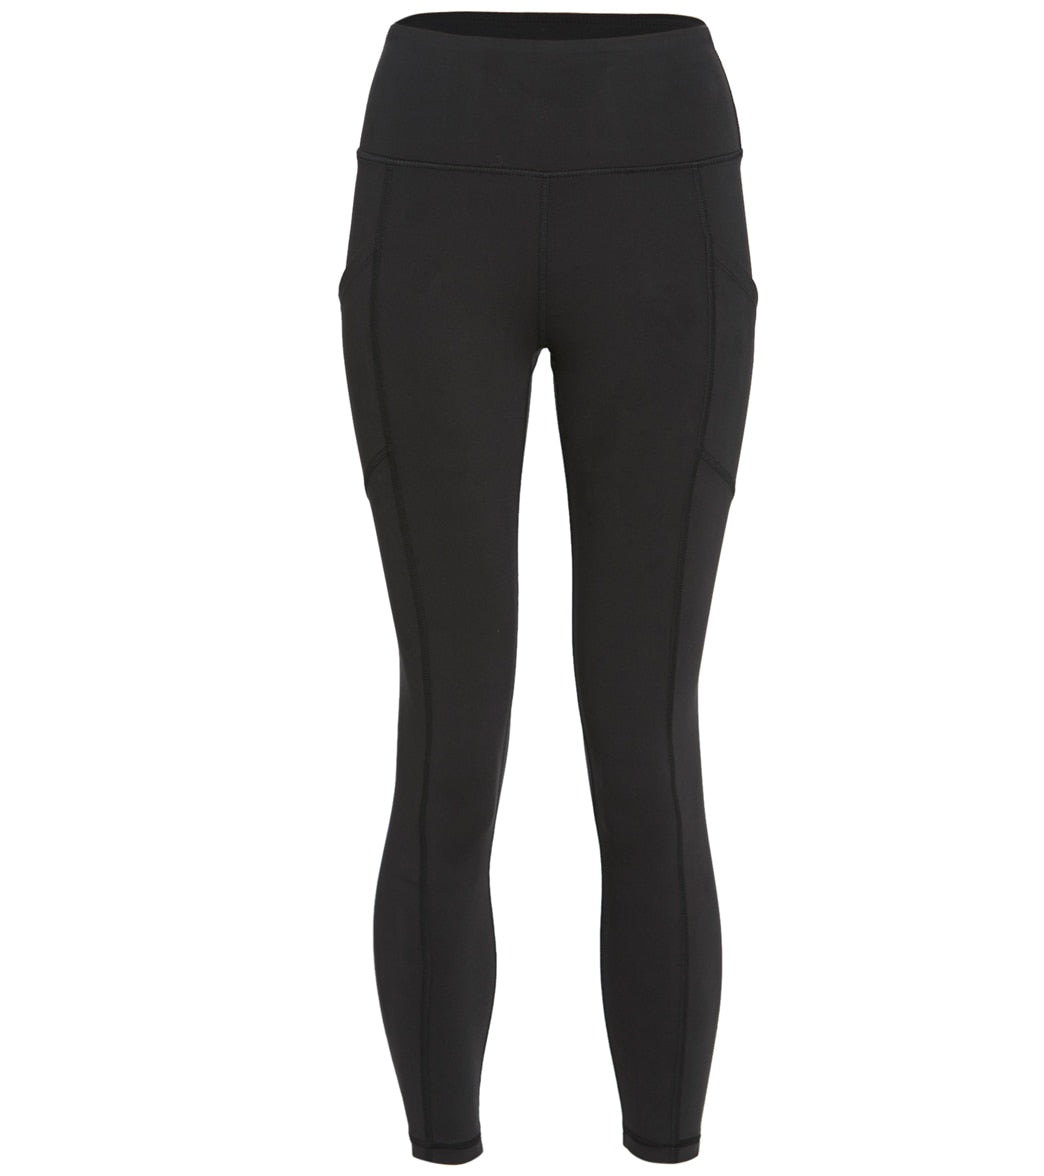 Balance Collection, Pants & Jumpsuits, Balance Collection Double Pocket  Yoga Pants Workout Leggins Size Large